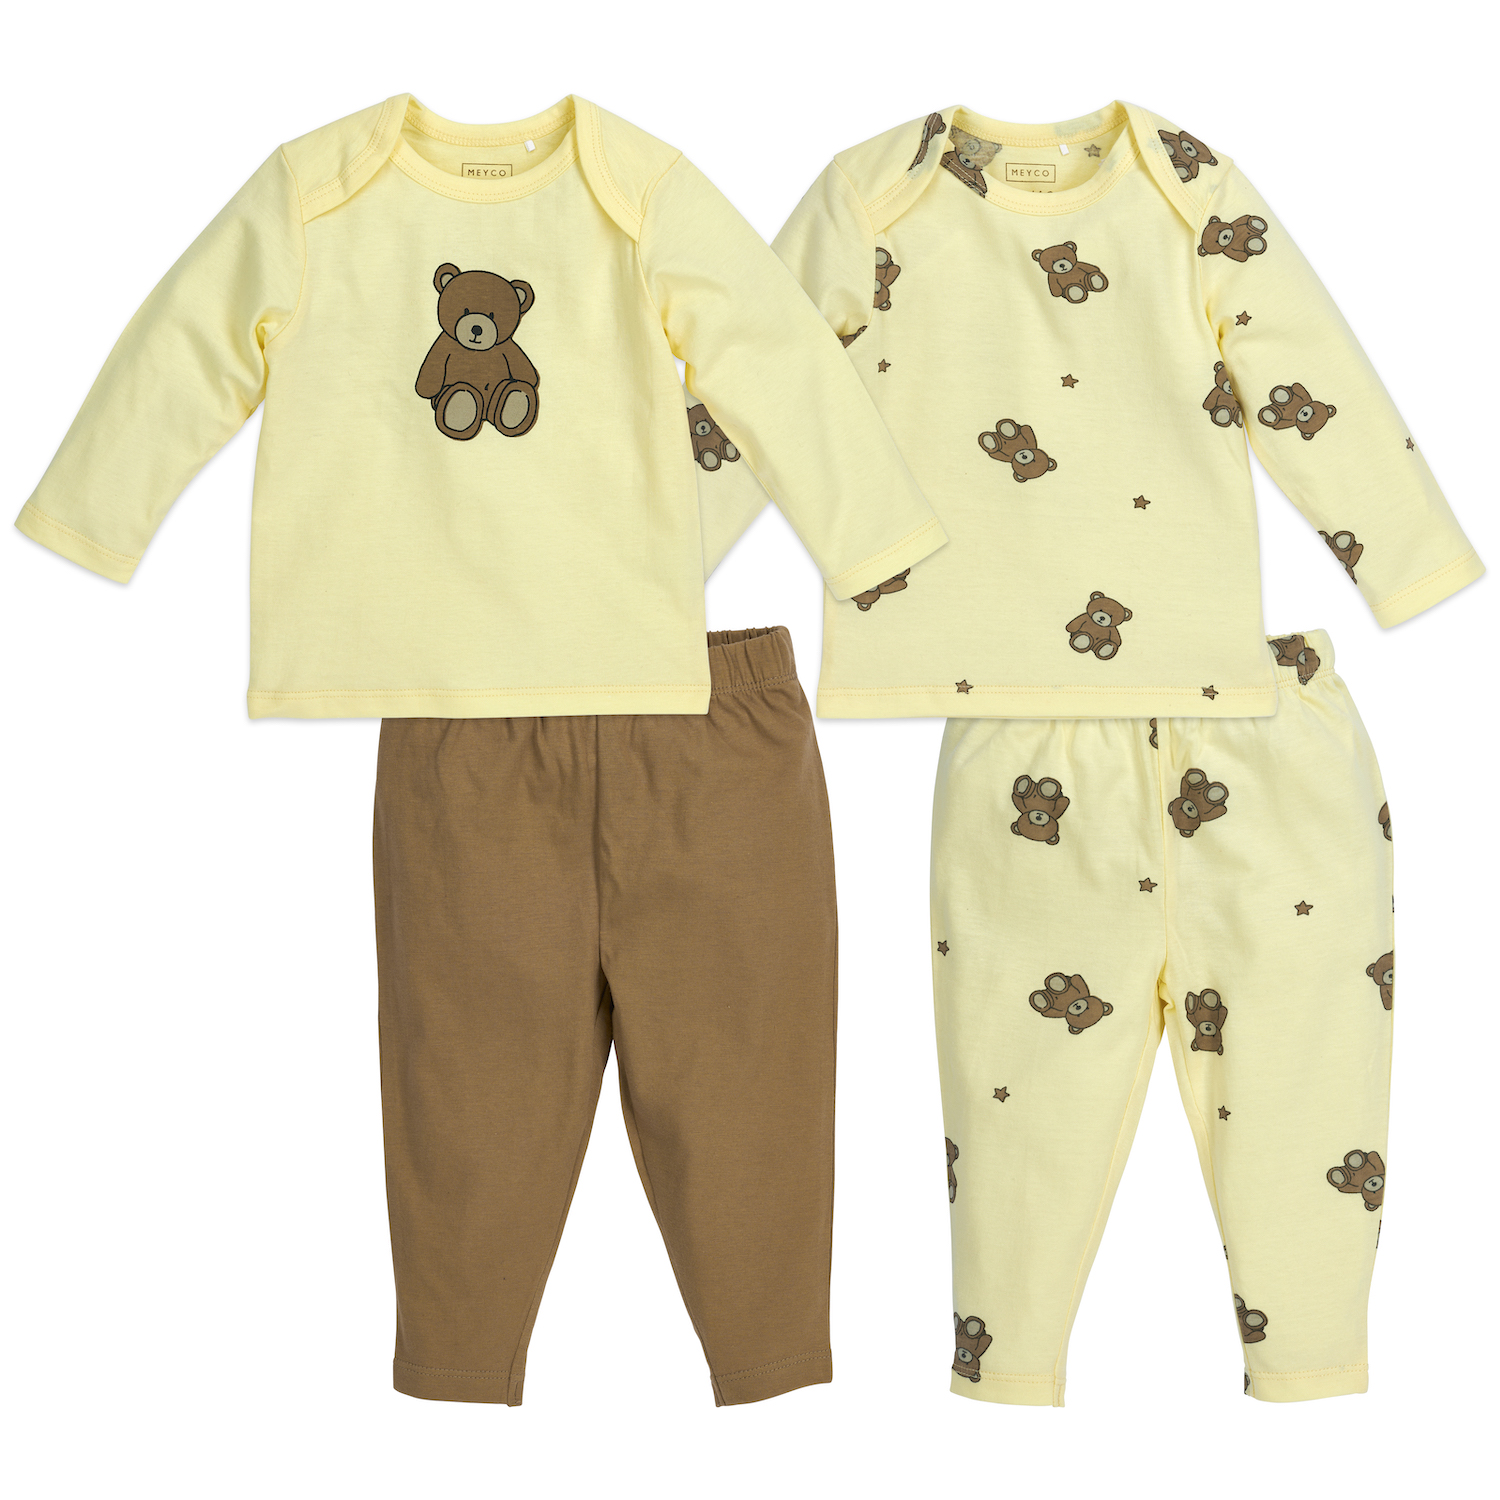 Baby pajamas 2-pack Teddy Bear - Soft Yellow - Size 50/56